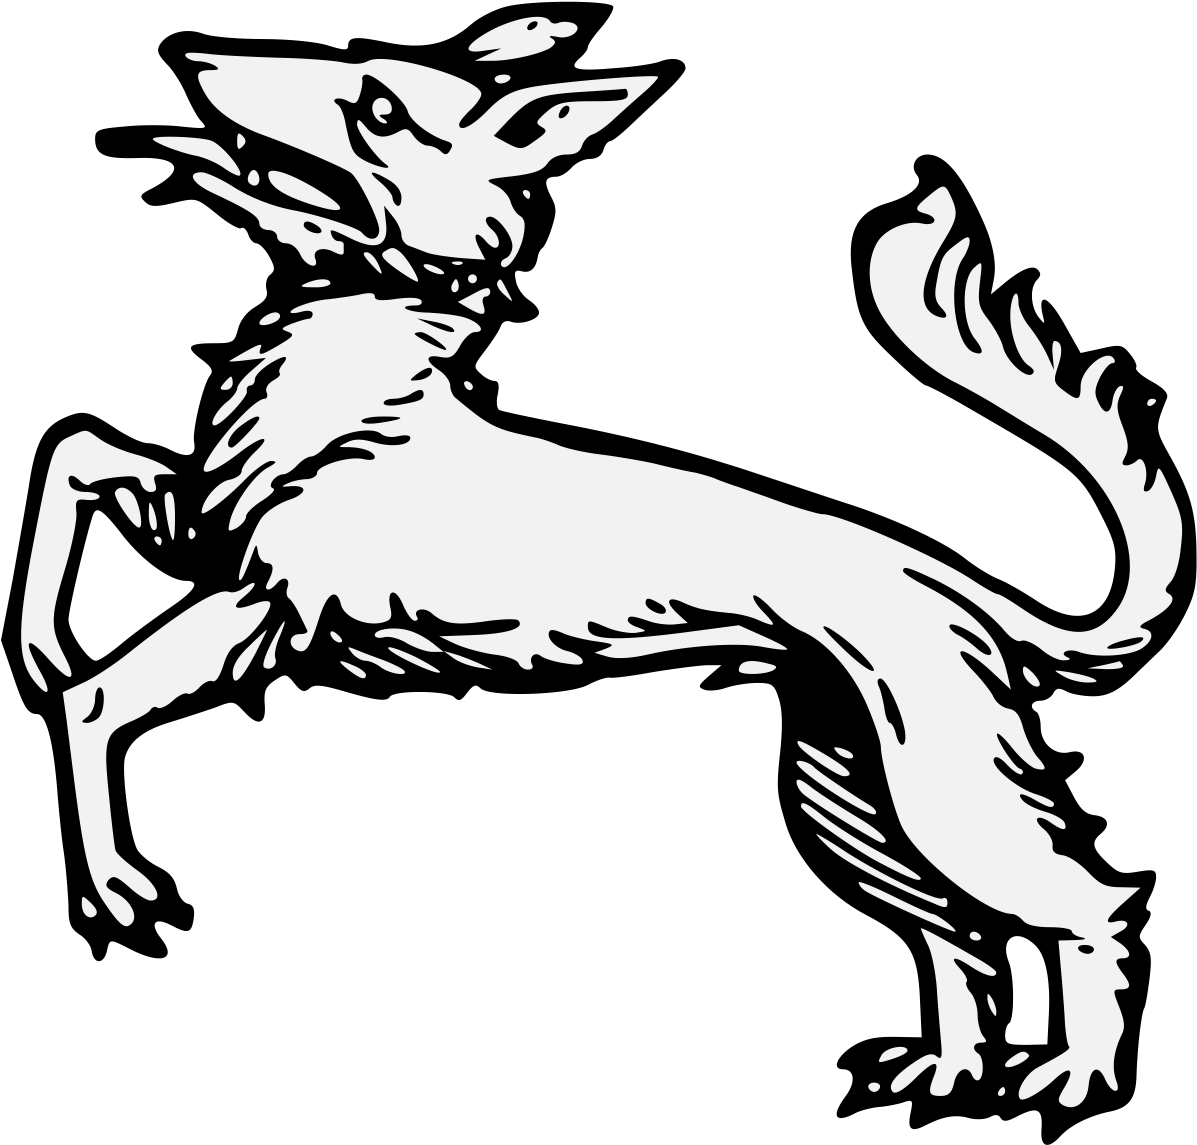 Stylized Two Headed Wolf Illustration